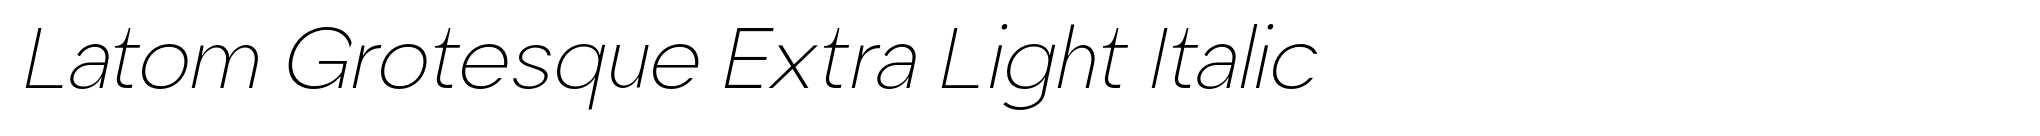 Latom Grotesque Extra Light Italic image